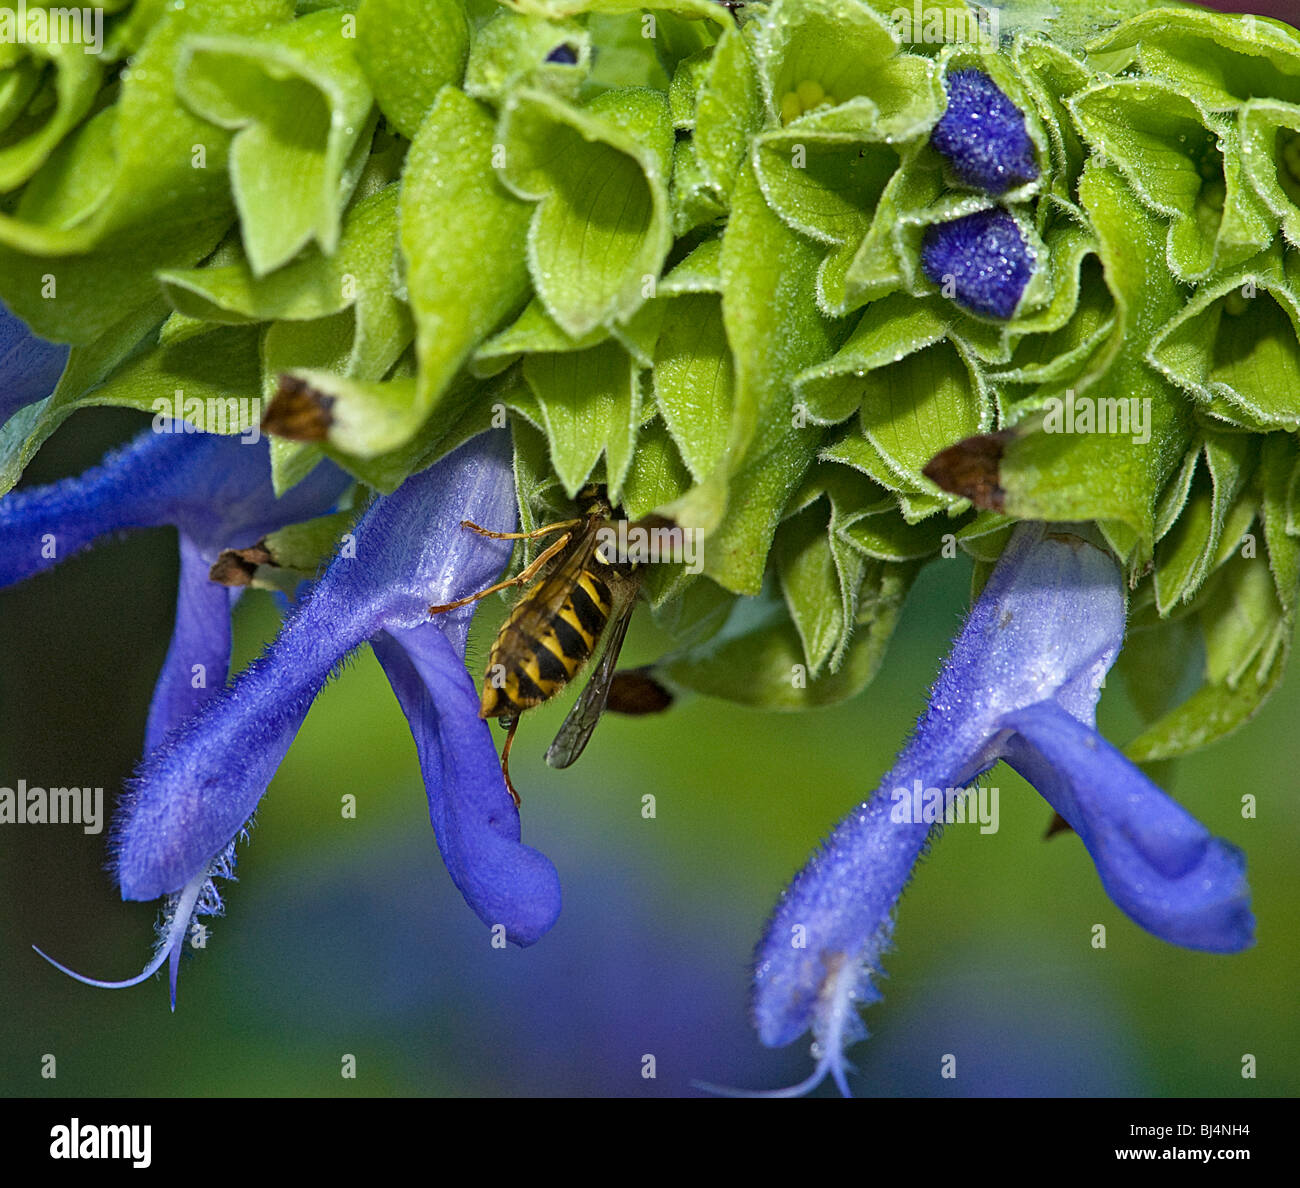 Wasp, Vespula vulgaris, entering green calyx of Salvia atrocyanea after flower fallen to feed Stock Photo